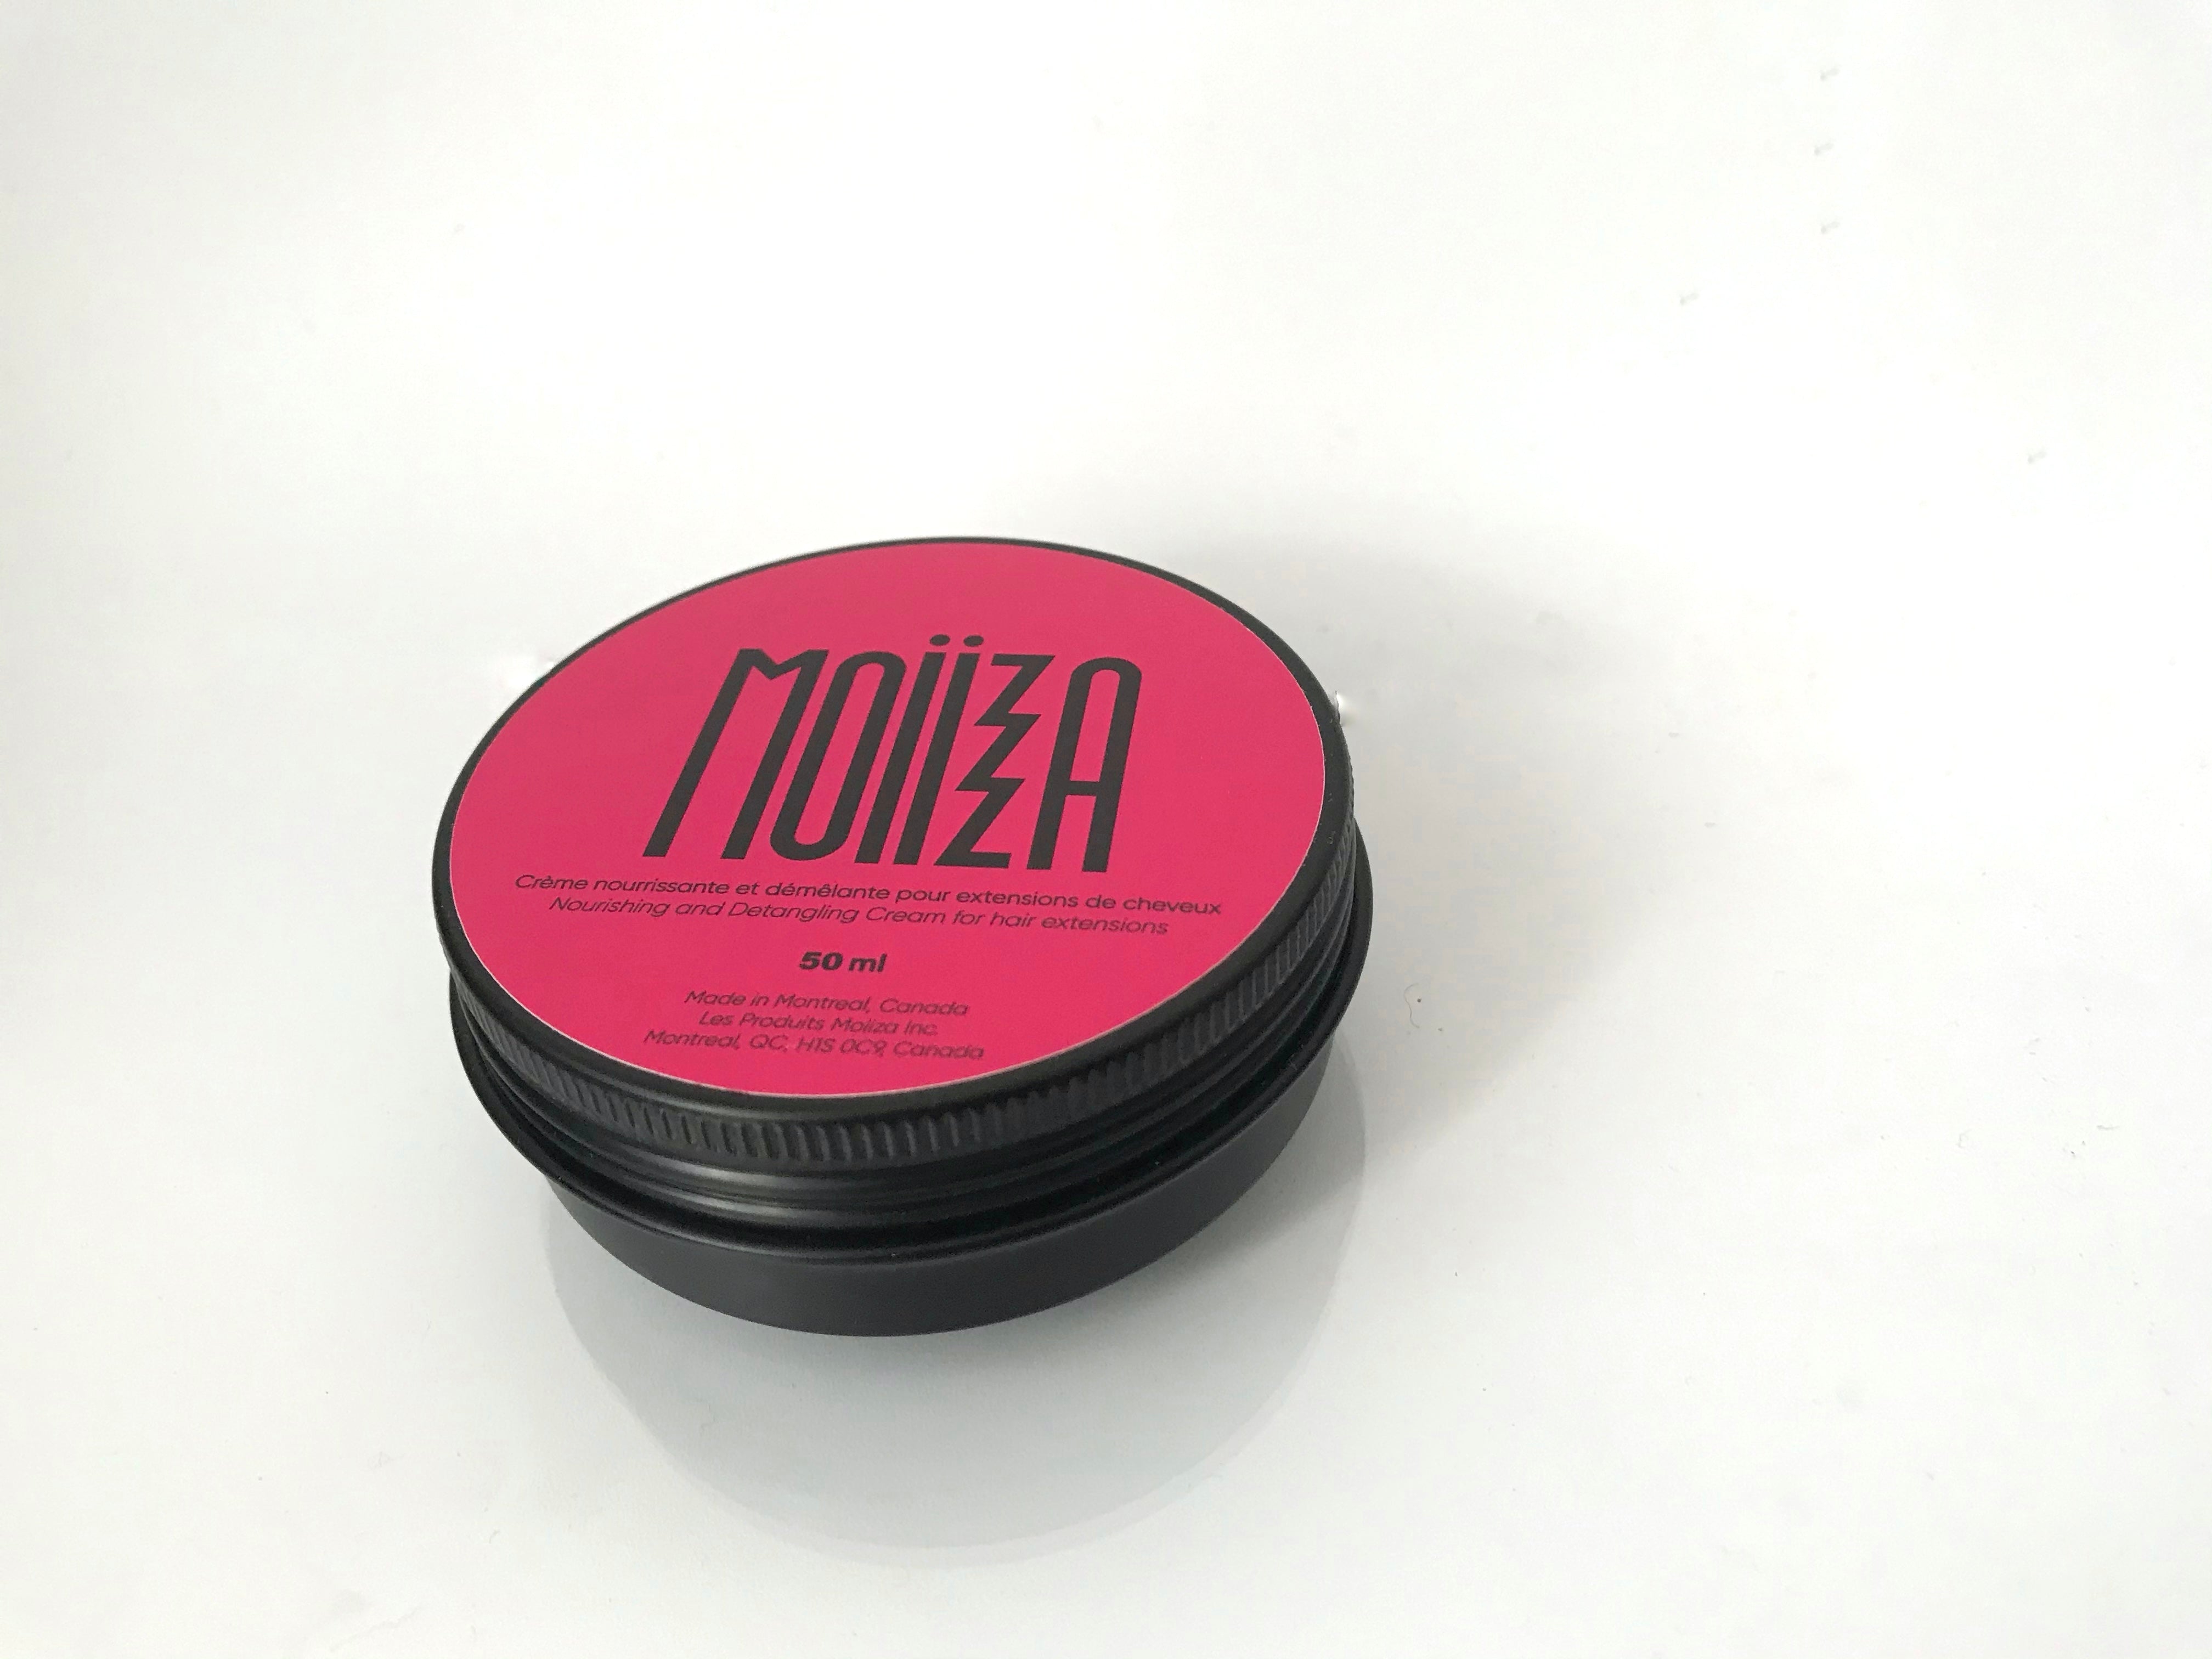 Moiiza 2oz - Hair Moisture Leave-In Treatment